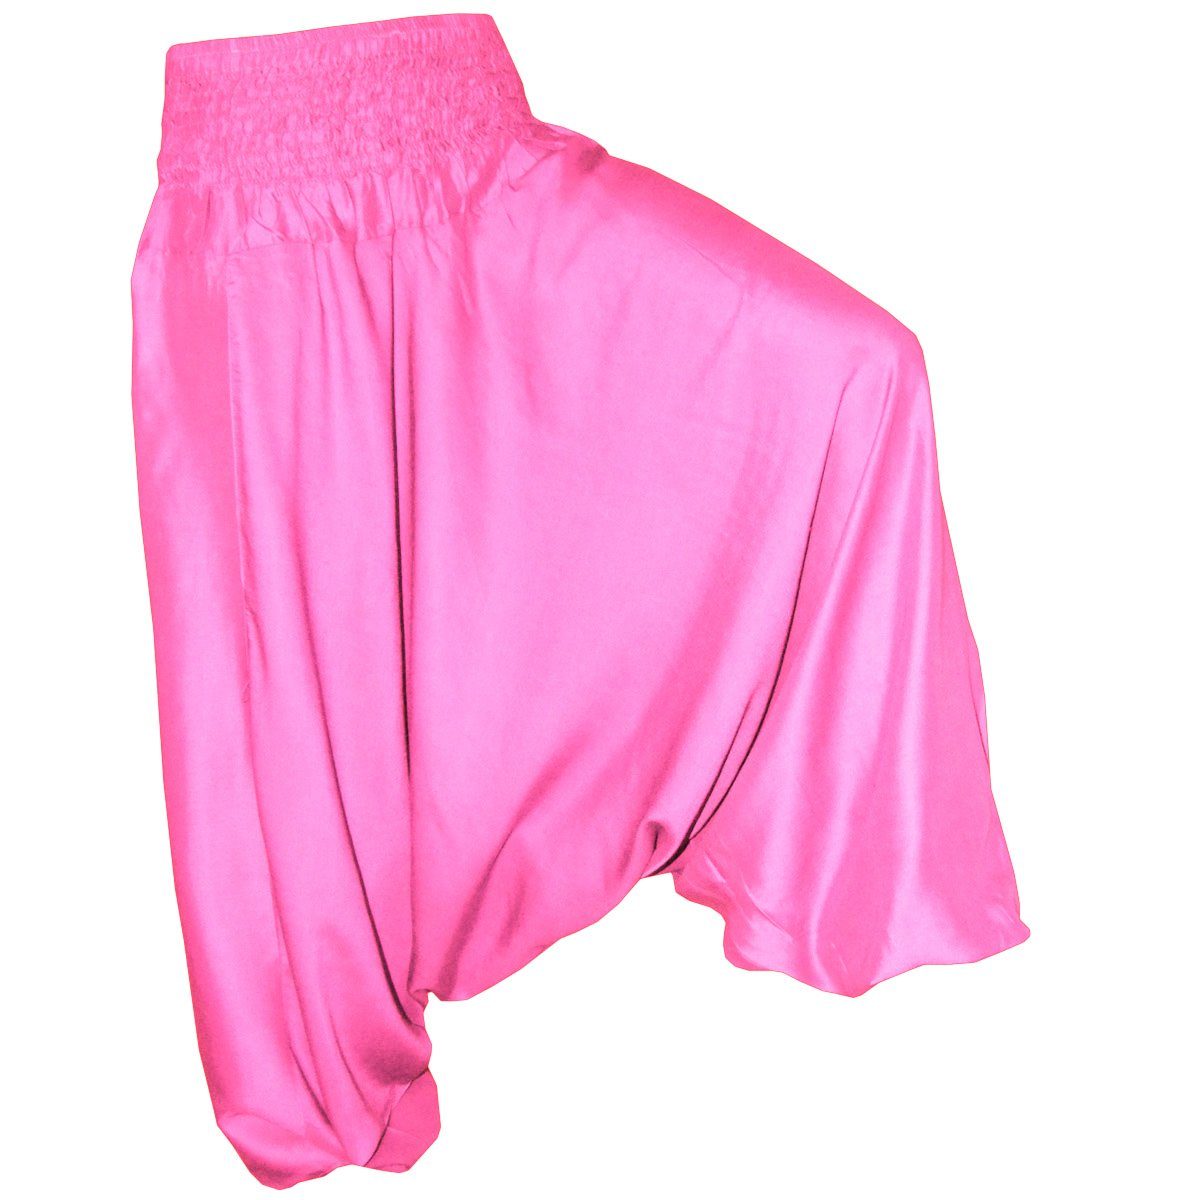 Relaxhose für Damen Pluderhose Viskose PANASIAM pink bequeme 100% Freizeithose aus Pumphose einfarbig natürlicher Aladinhose Haremshose